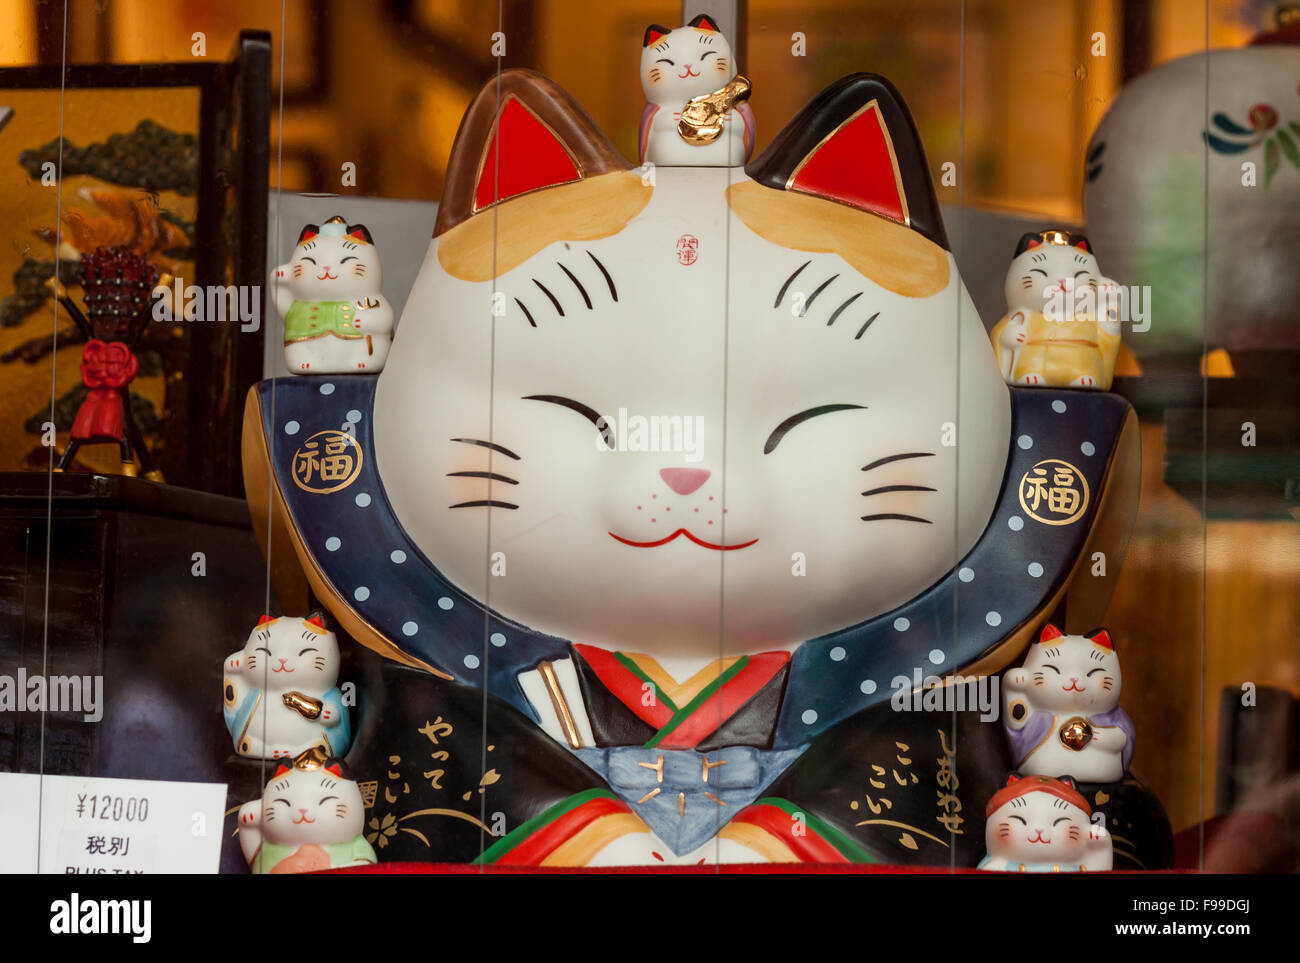 TOKYO, JAPAN - JUNE 27, 2015: Maneki-neko, japanese lucky charm cat figurine, on display in a shop in Asakusa district, Tokyo. Stock Photo